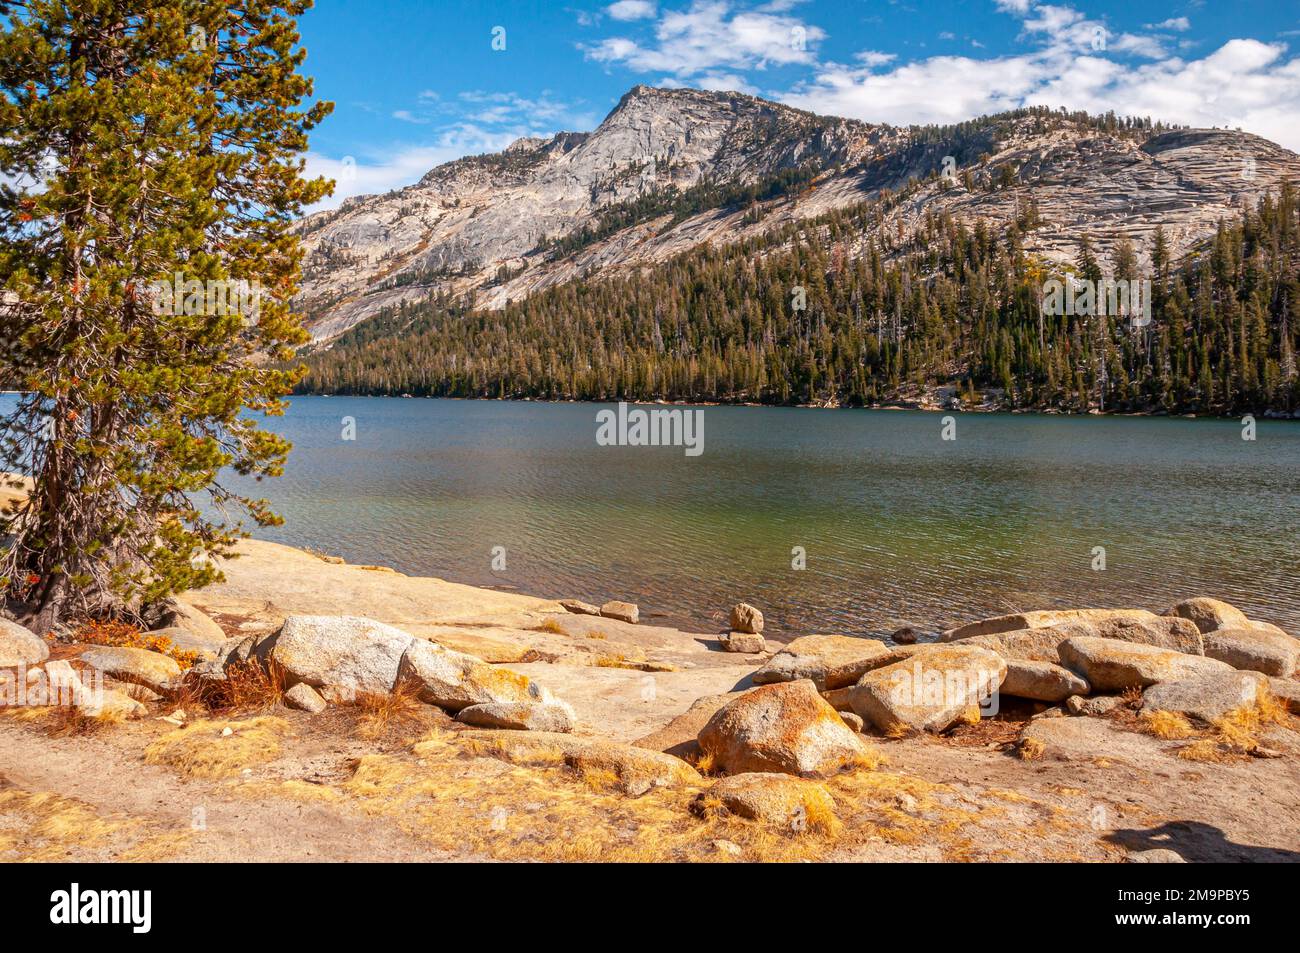 A beautiful view of the crisp waters of Tenaya Lake in Yosemite National Park beneath rocky mountainsides. Stock Photo